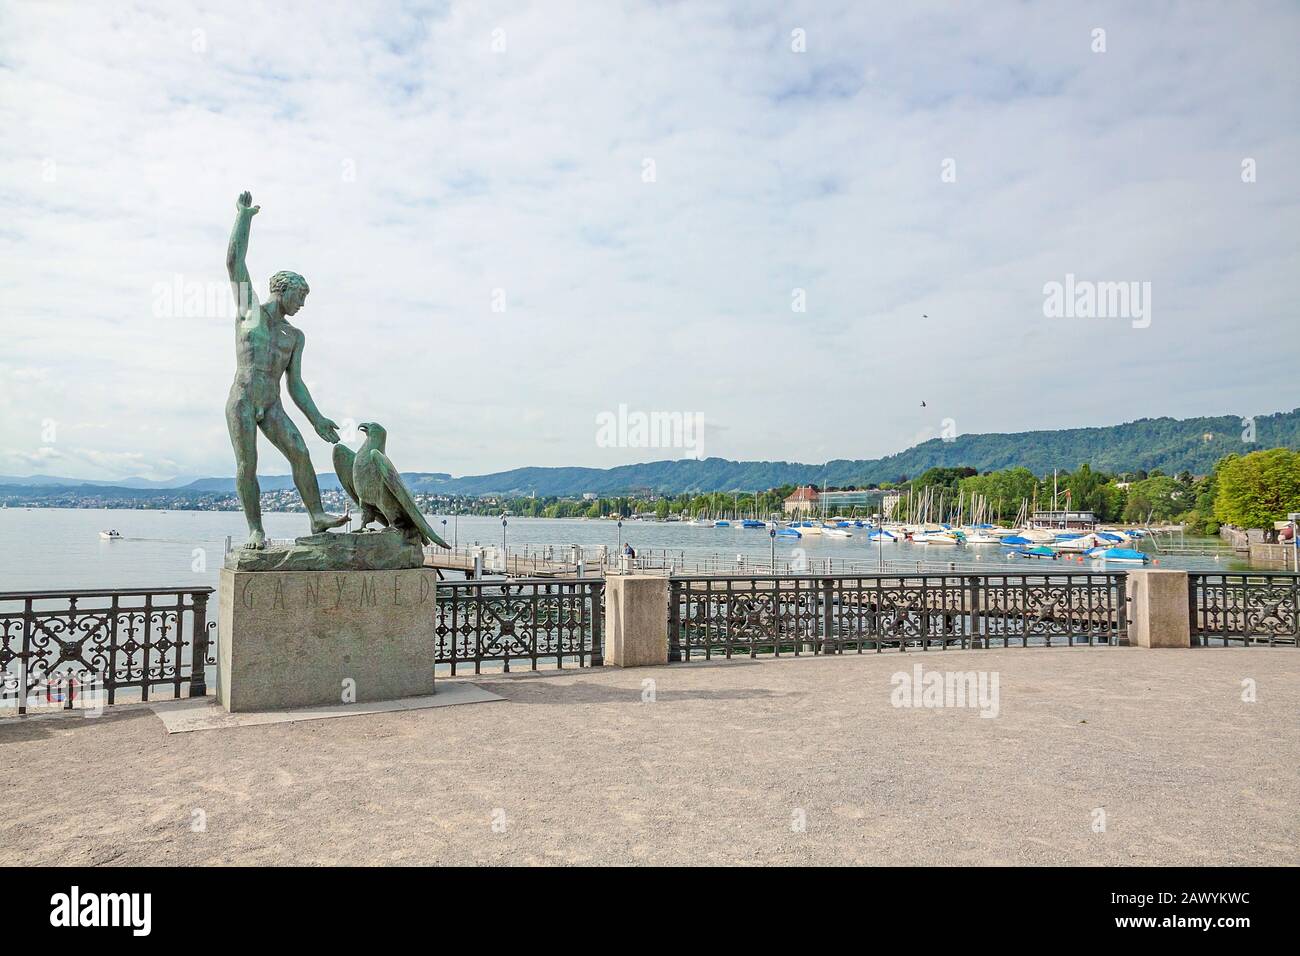 Zurich, Switzerland - June 10, 2017: Ganymed Statue (statue of a man and a eagle) in Zurich, Switzerland - Lake Zurich panorama in the background Stock Photo